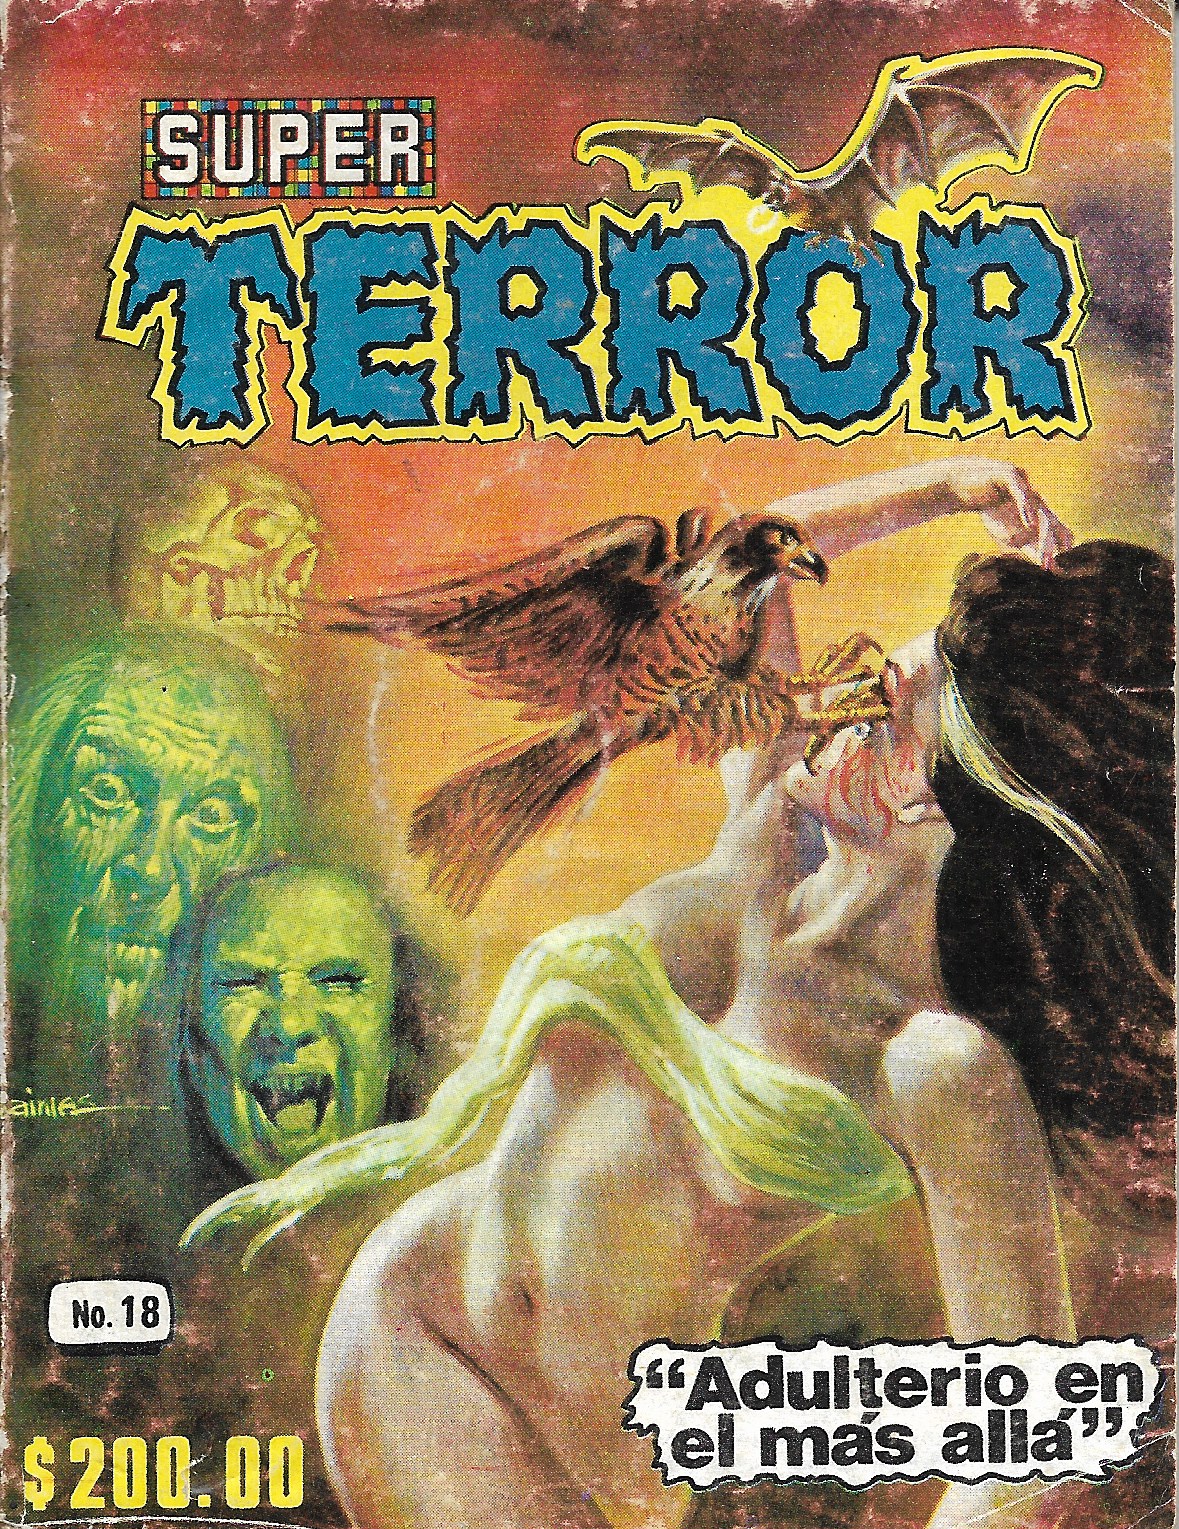 70s Porno Mexicana Caricatura - A Brief History of Mexican Horror Comic Books - Reactor